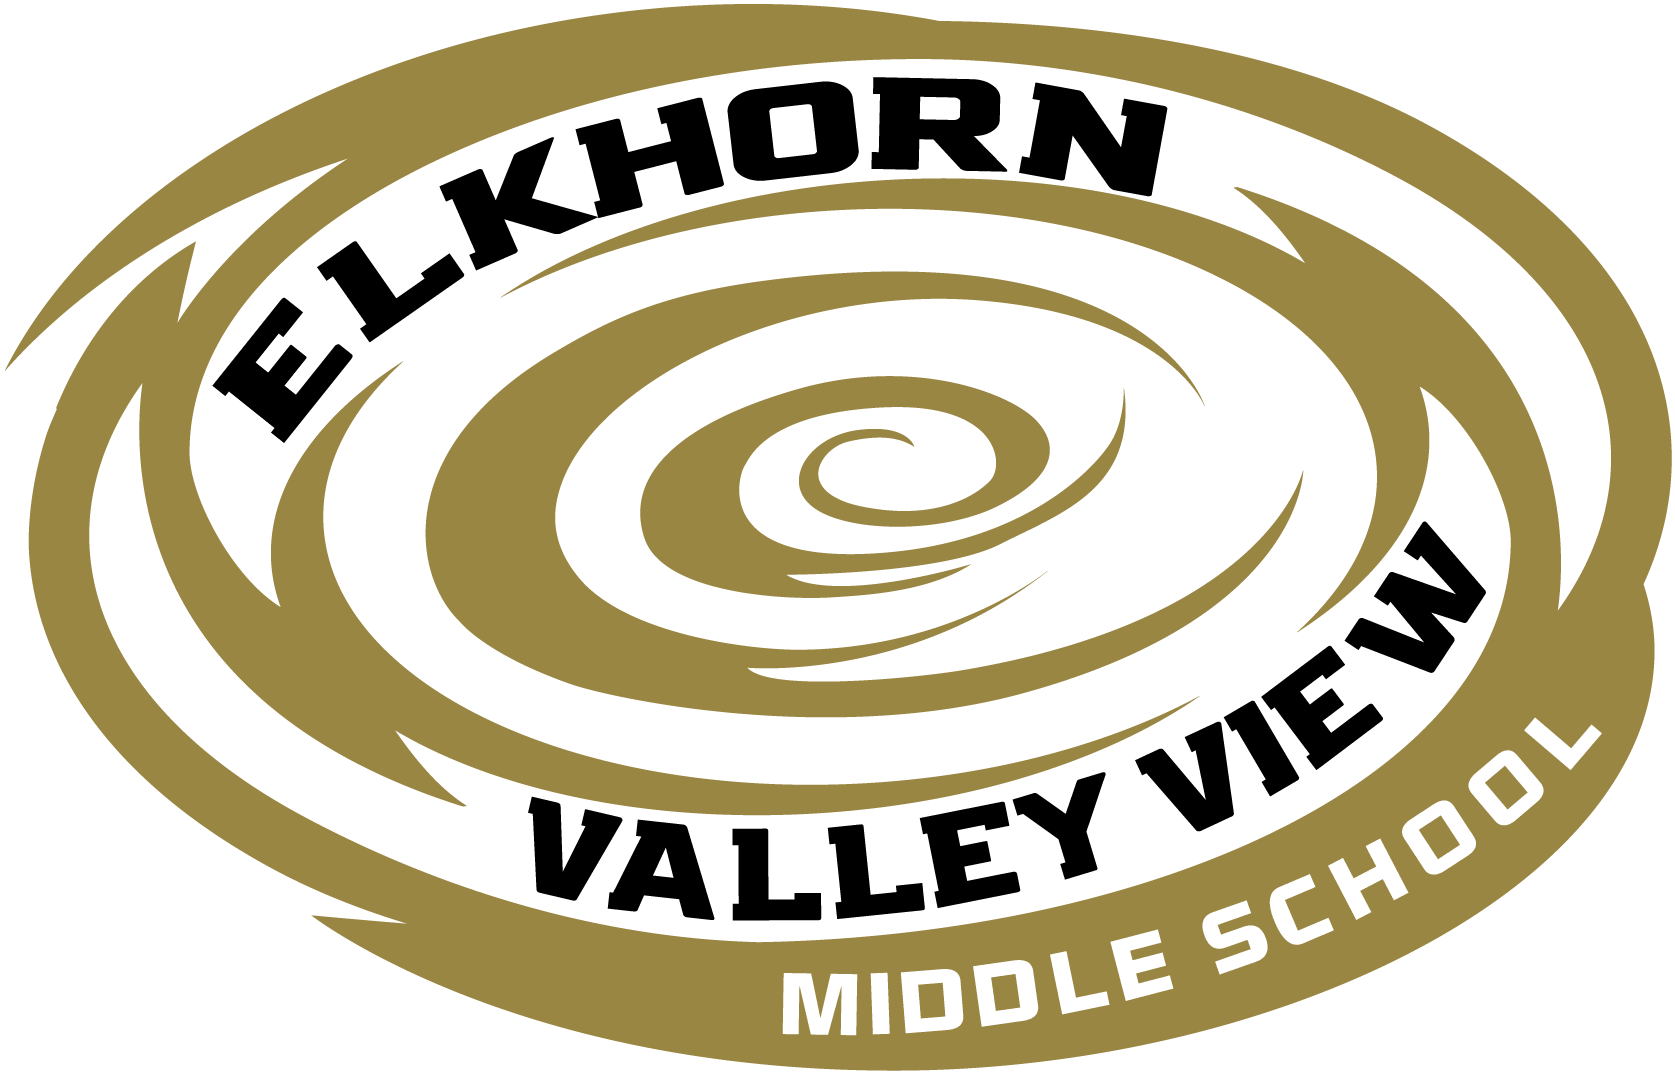 Elkhorn Valley View Middle School